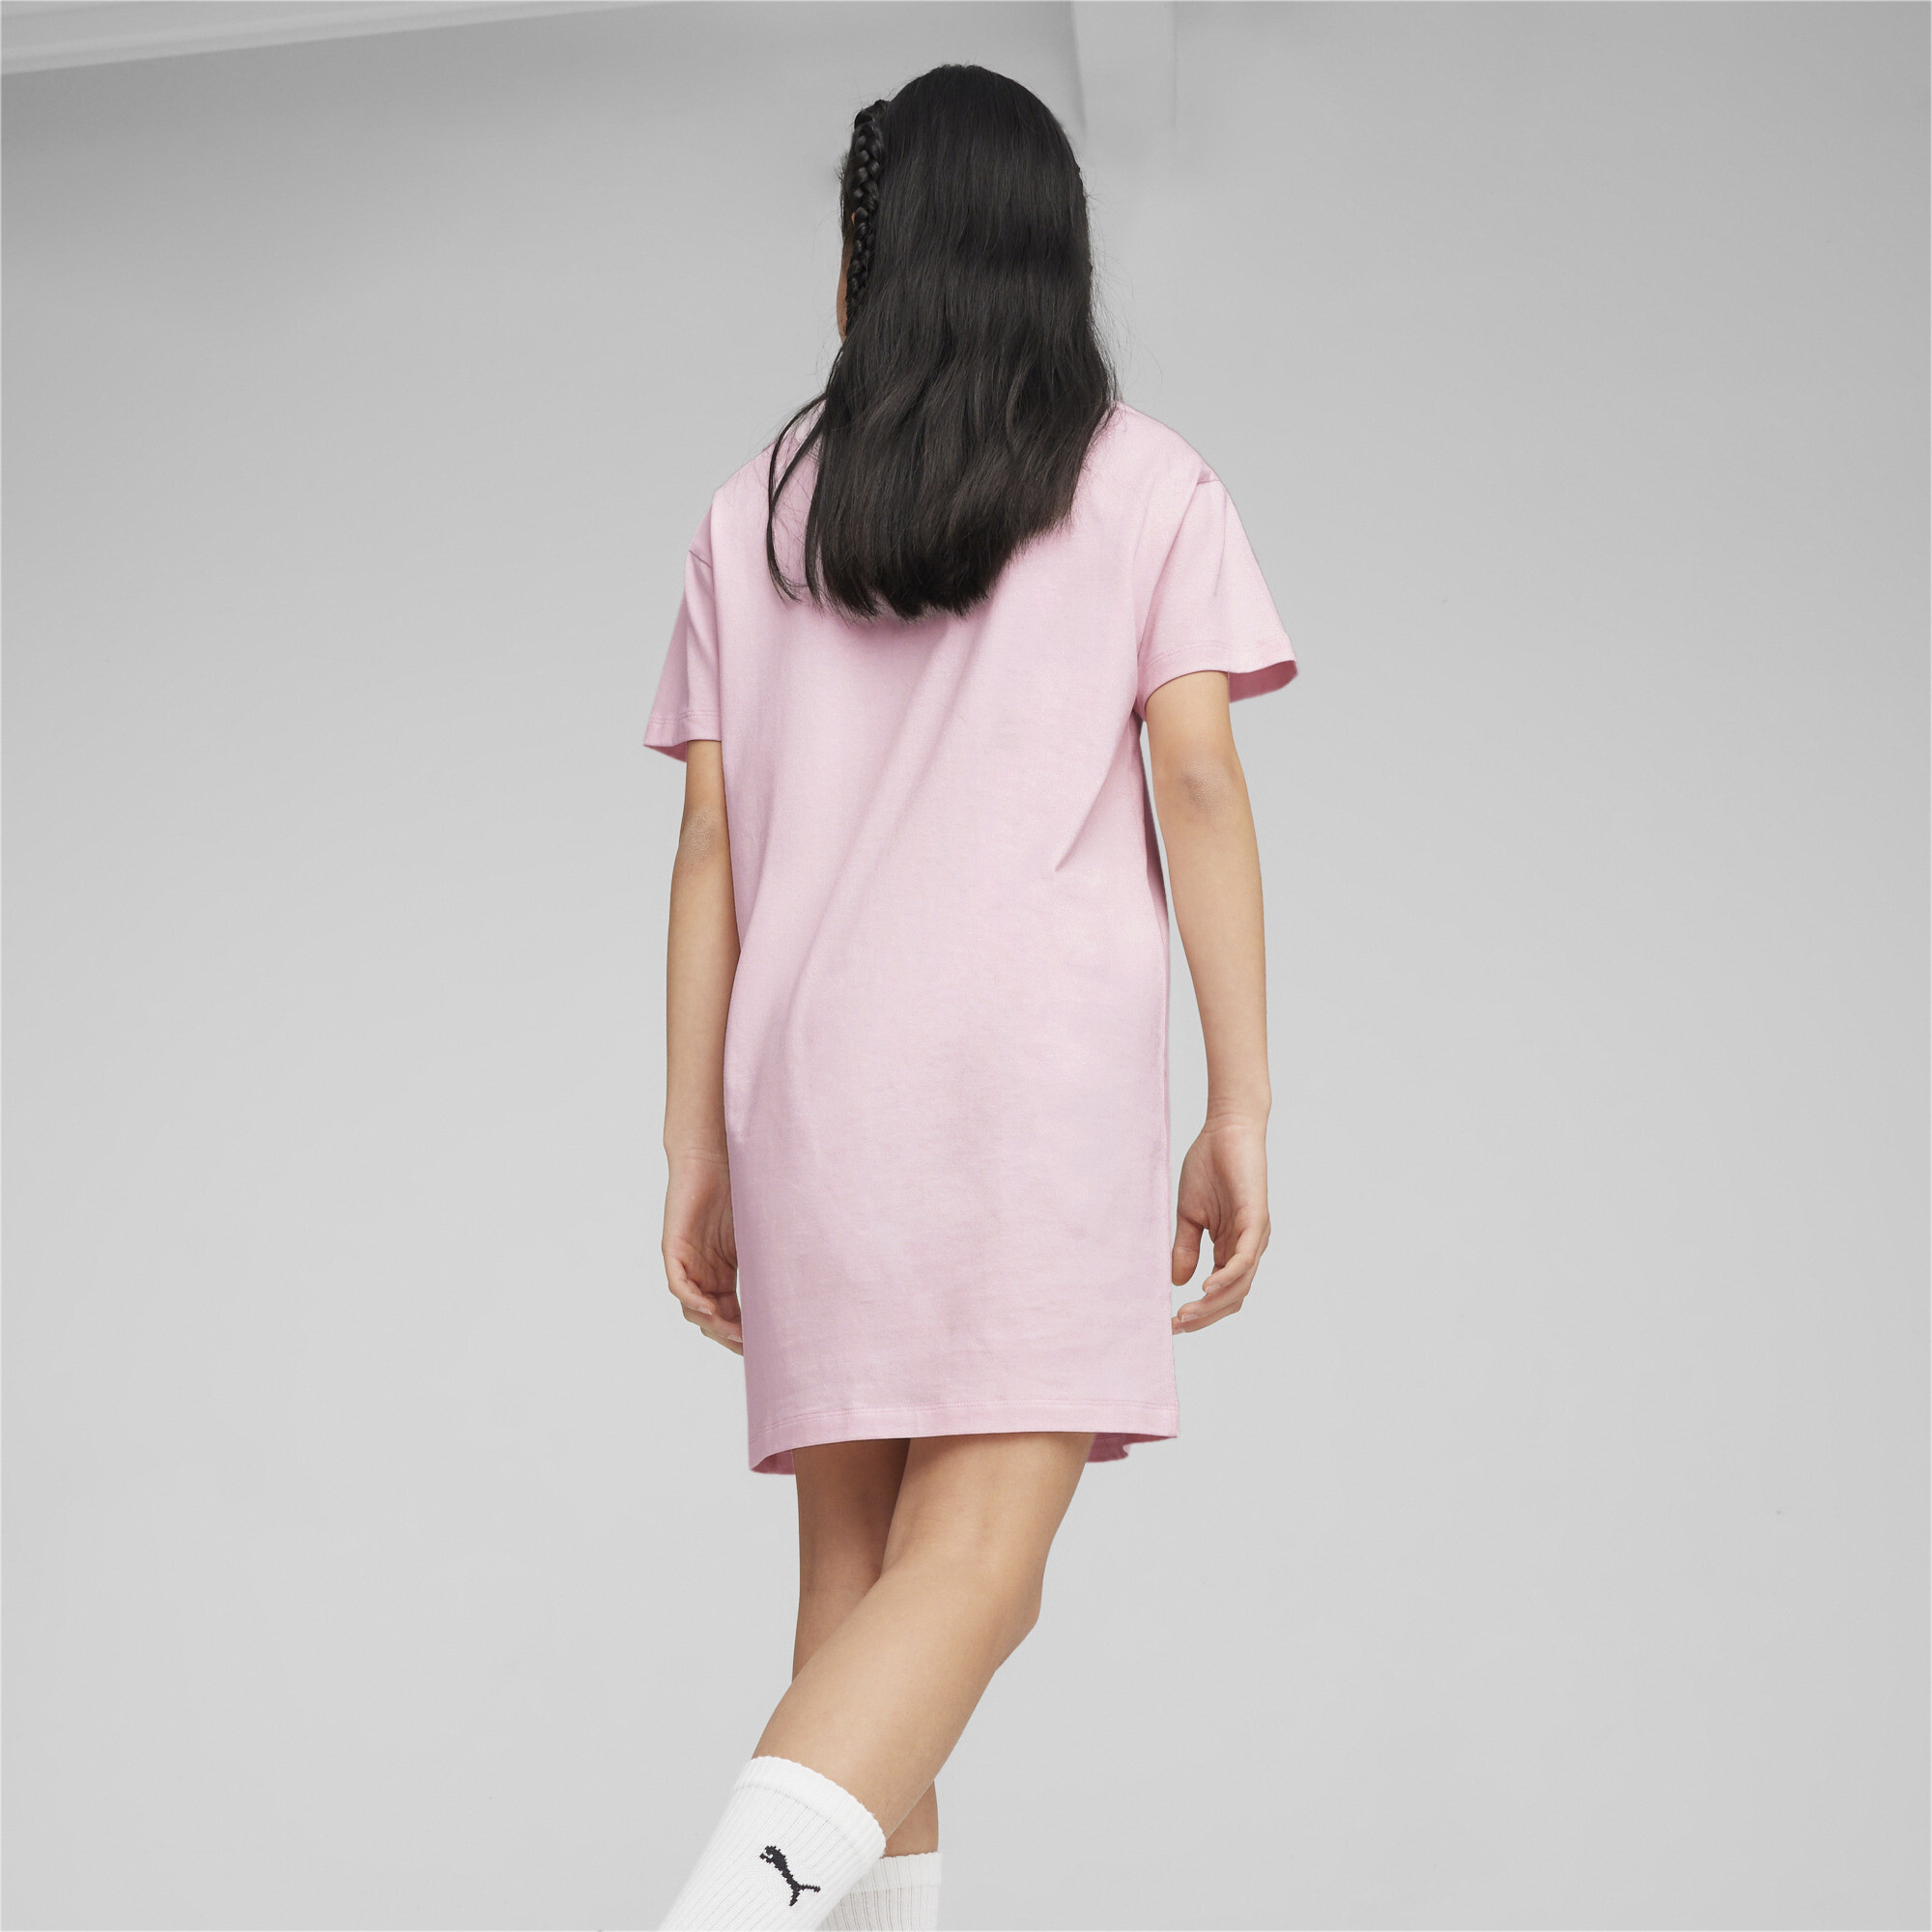 Puma BETTER CLASSICS Girl's Tee Dress, Pink, Size 9-10Y, Shop